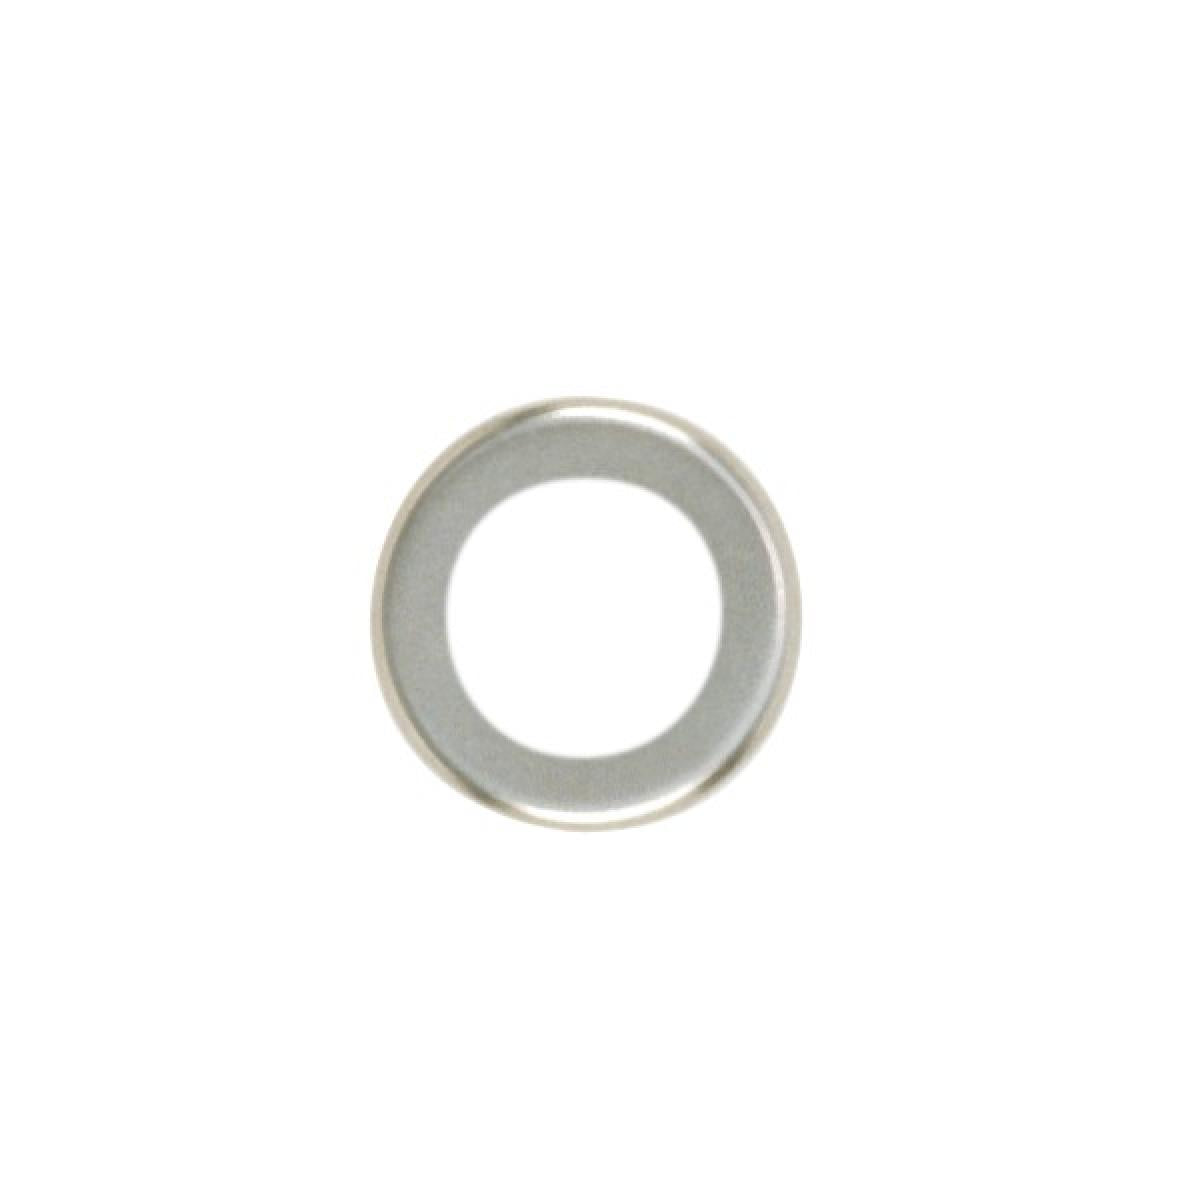 Satco 90-1832 Steel Check Ring Curled Edge 1/4 IP Slip Nickel Plated Finish 1" Diameter